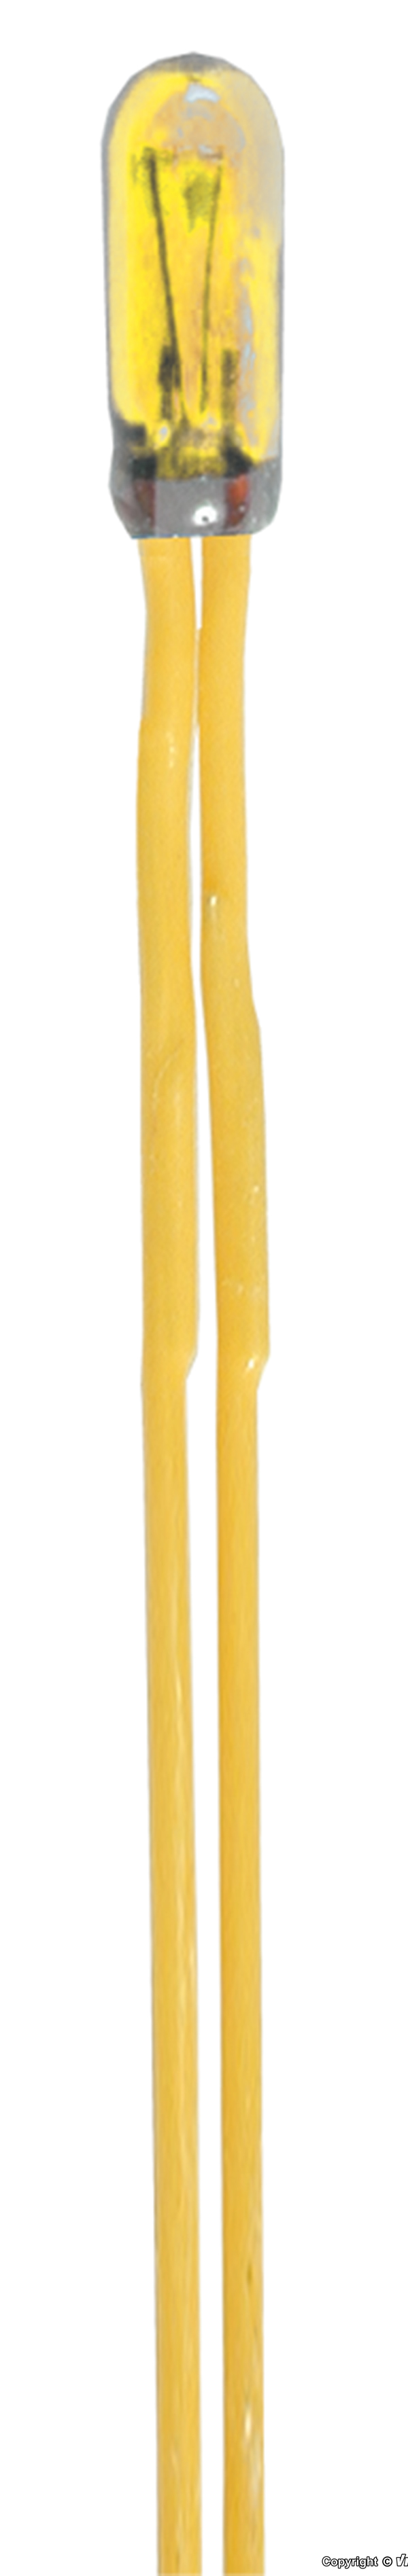 Viessmann 3501 - Spare bulb yellow T 3/4, Ø 2,3 mm, 12 V, 50 mA,2 cables, 2 pieces